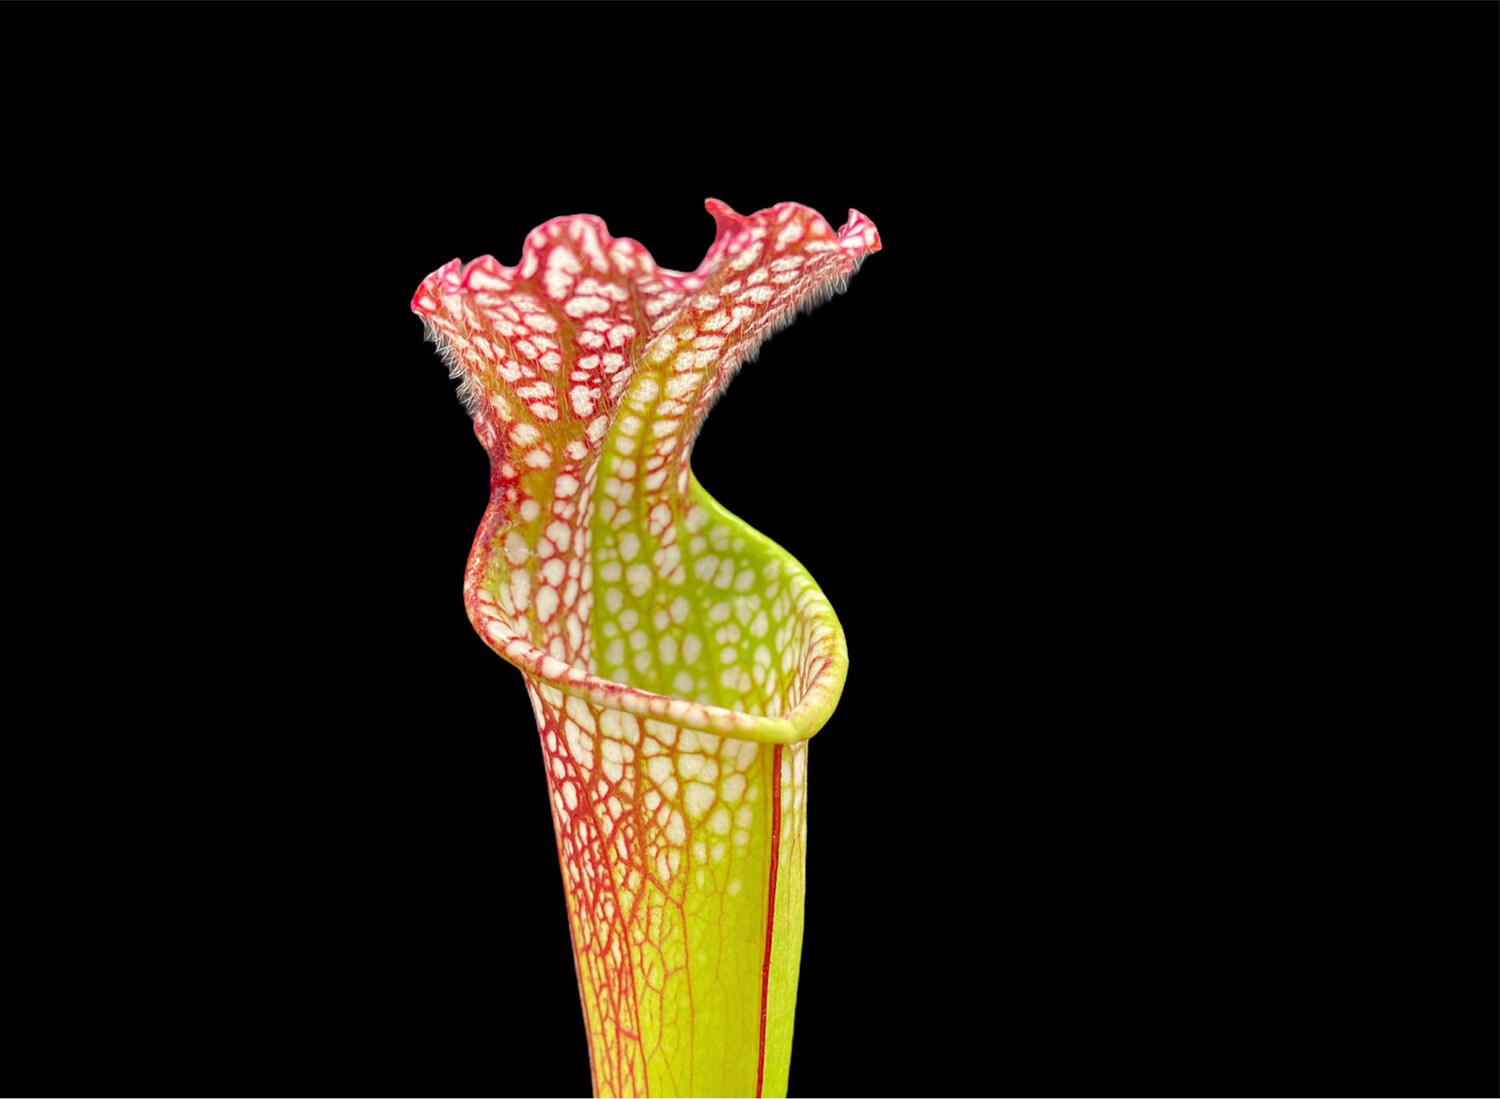 Sarracenia leucophylla “Big mouth” - Nice Plants (Dormant Rhizome Currently)